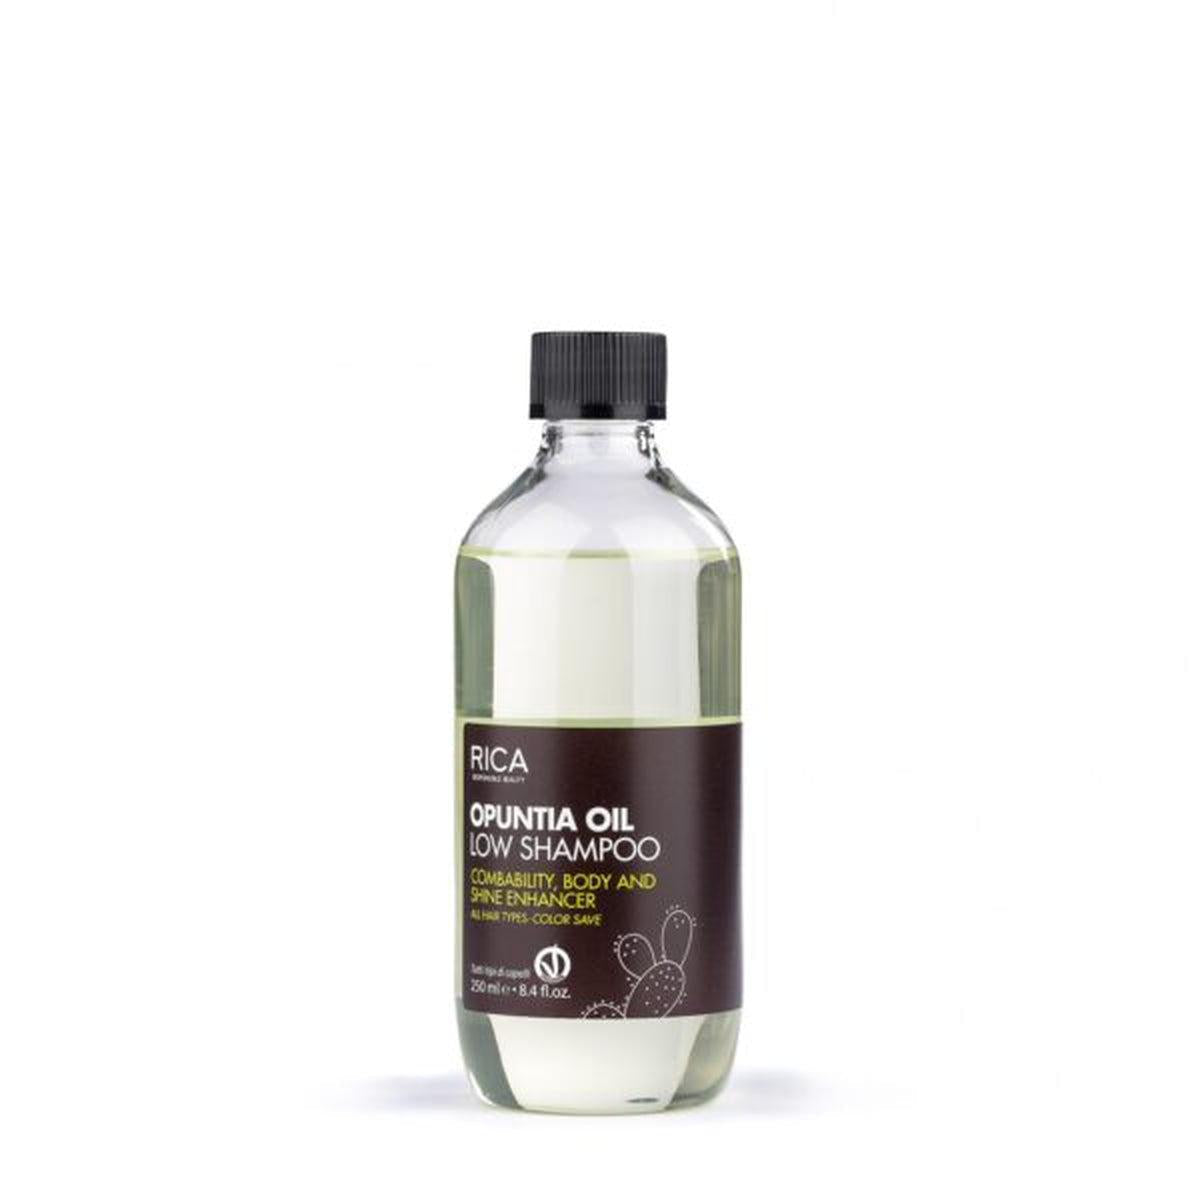 Rica Opuntia Oil Low Shampoo 250ml